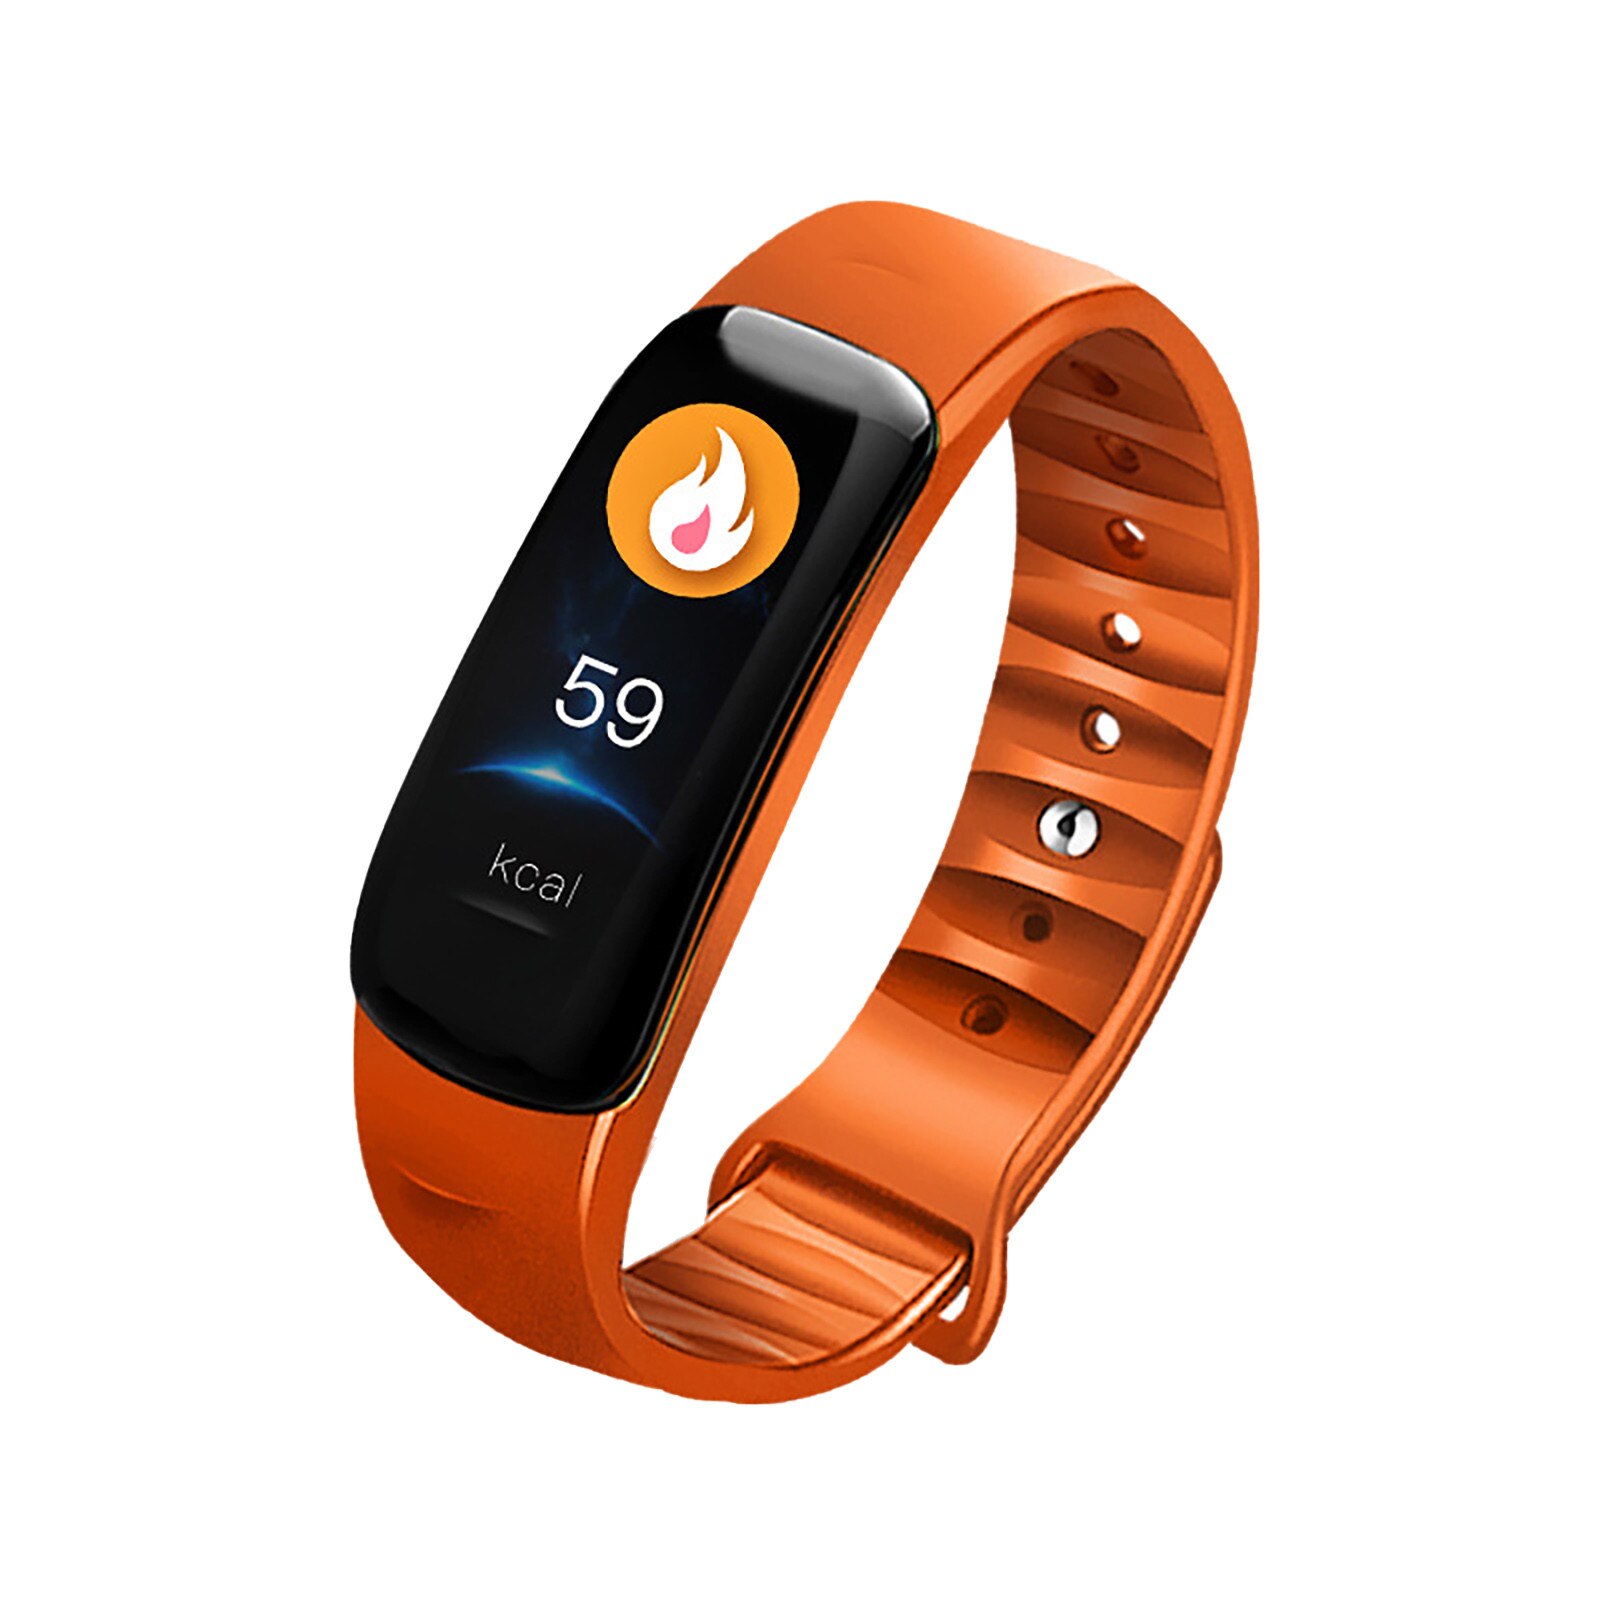 Sport Smart Wrist Watch Bracelet Display Fitness Gauge Step Tracker Digital LCD Pedometer Run Step Walking Calorie Counter: Orange